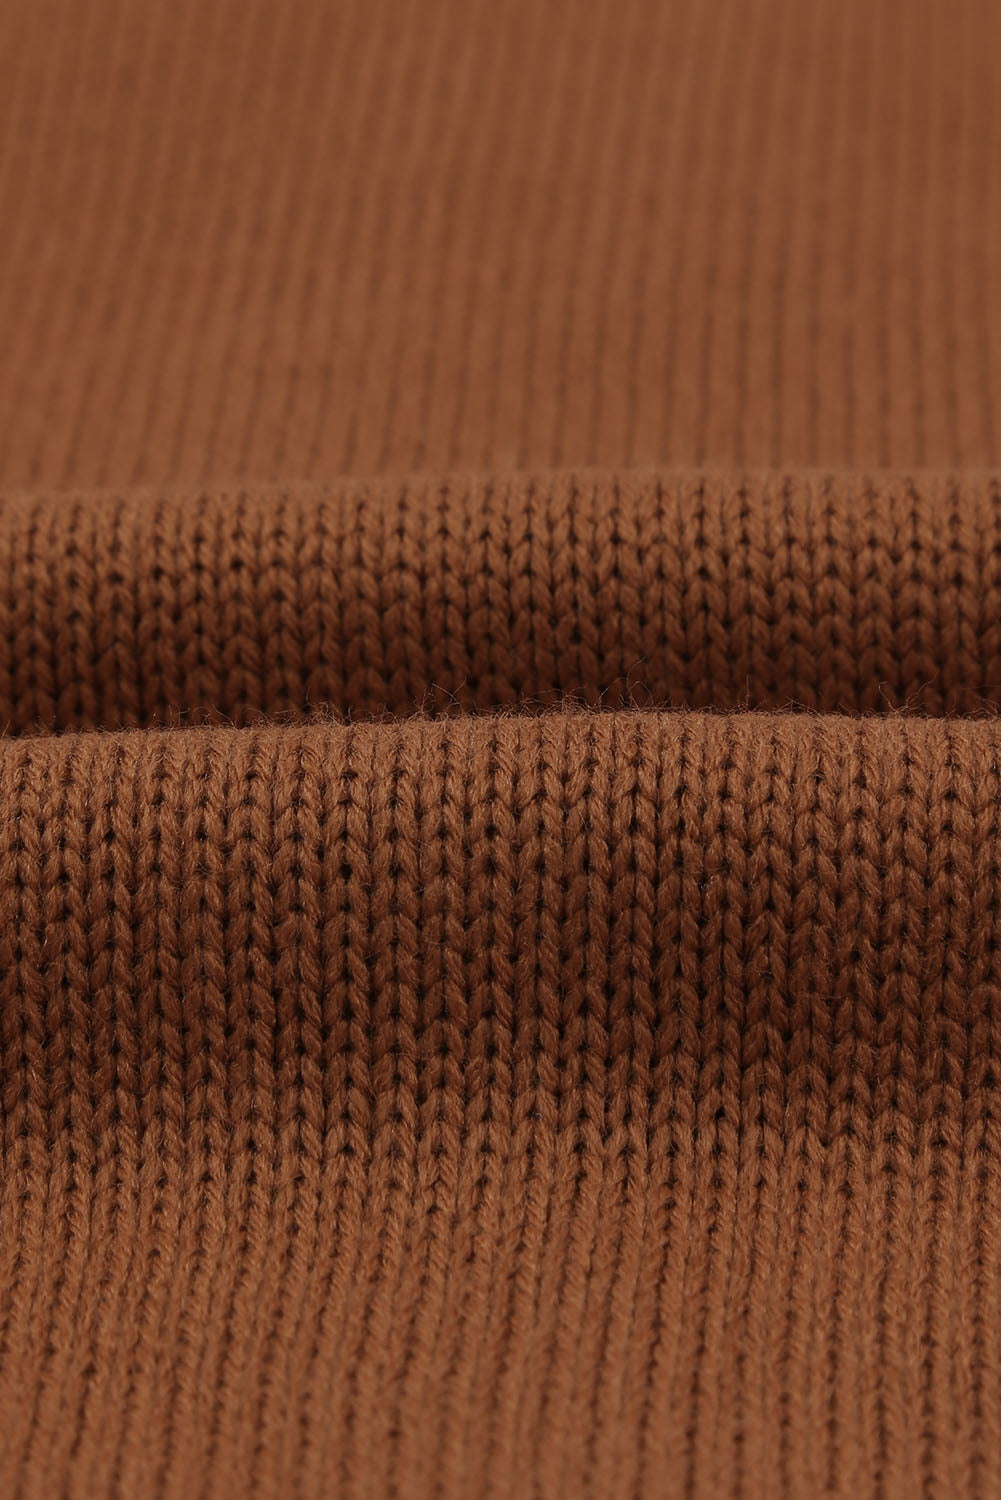 V Neck Contrast Stripes Trims Short Sleeve Sweater